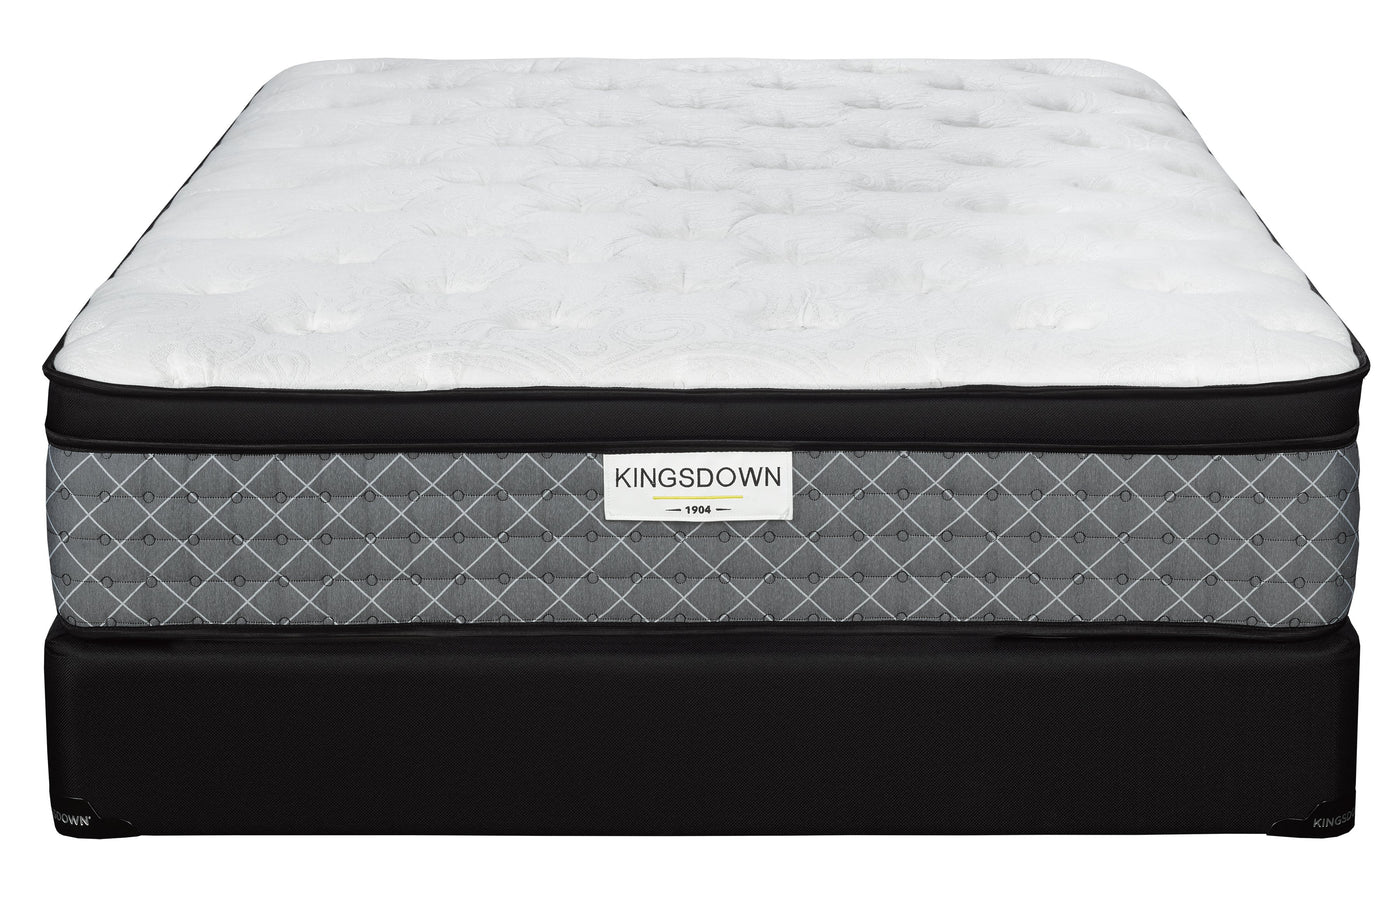 kingsdown mattress price comparison